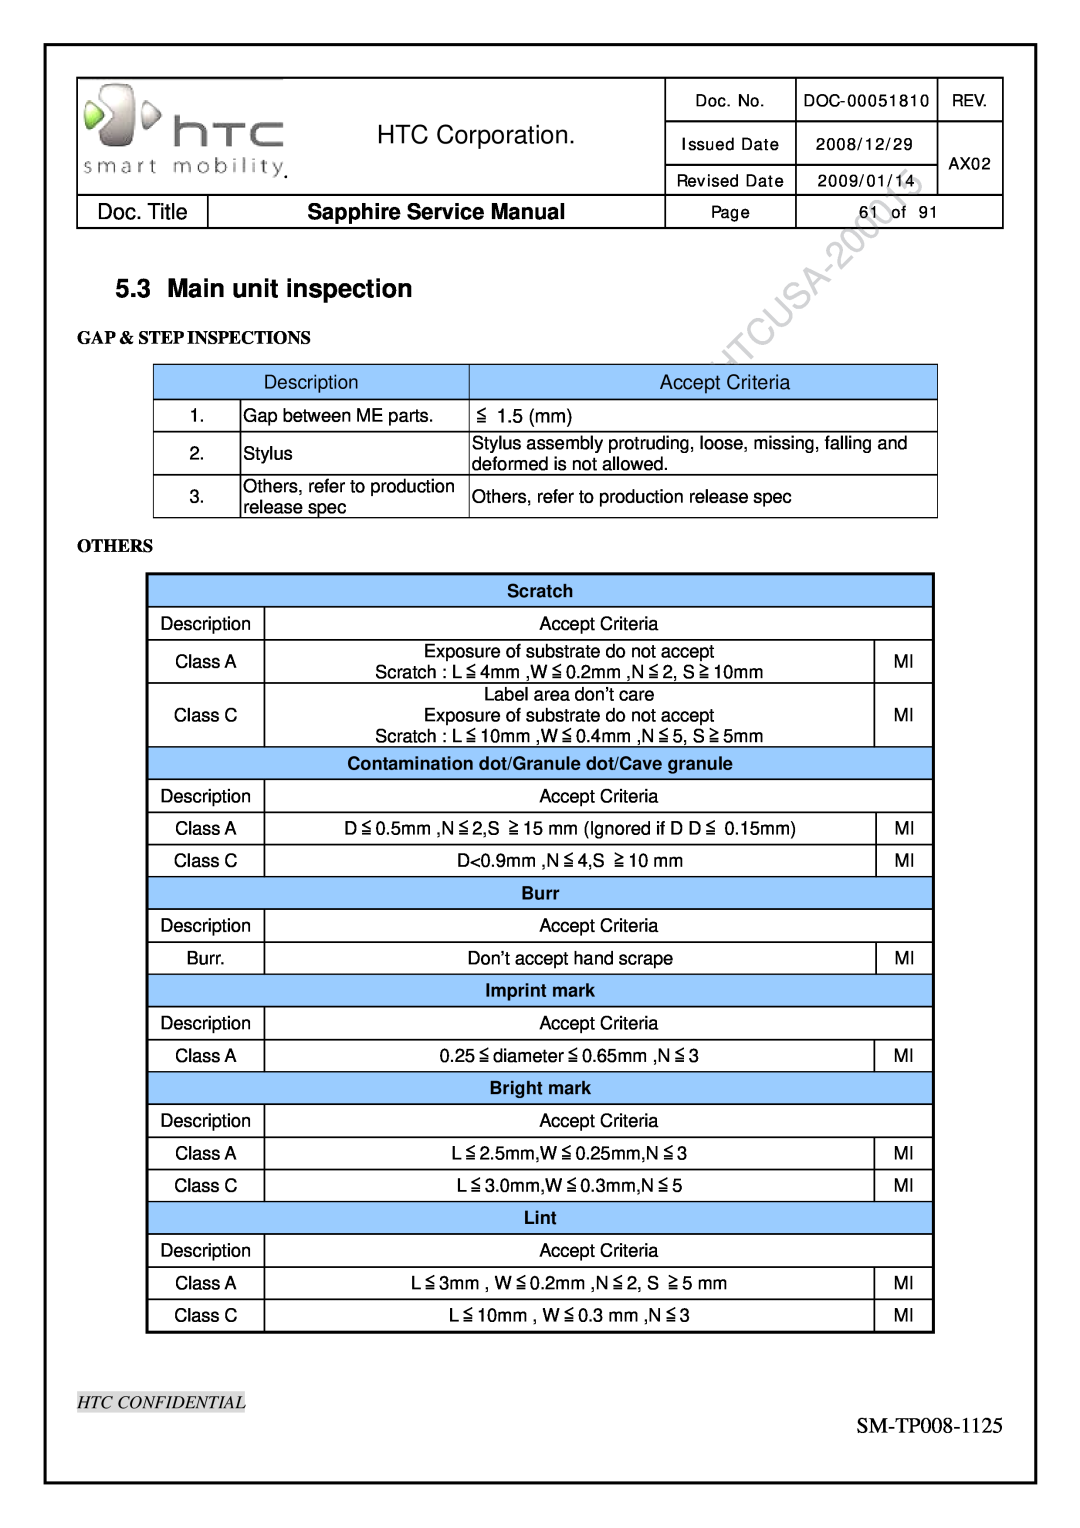 HTC SM-TP008-1125 Main unit inspection, HTC Corporation, Sapphire Service Manual, Accept Criteria, Gap & Step Inspections 